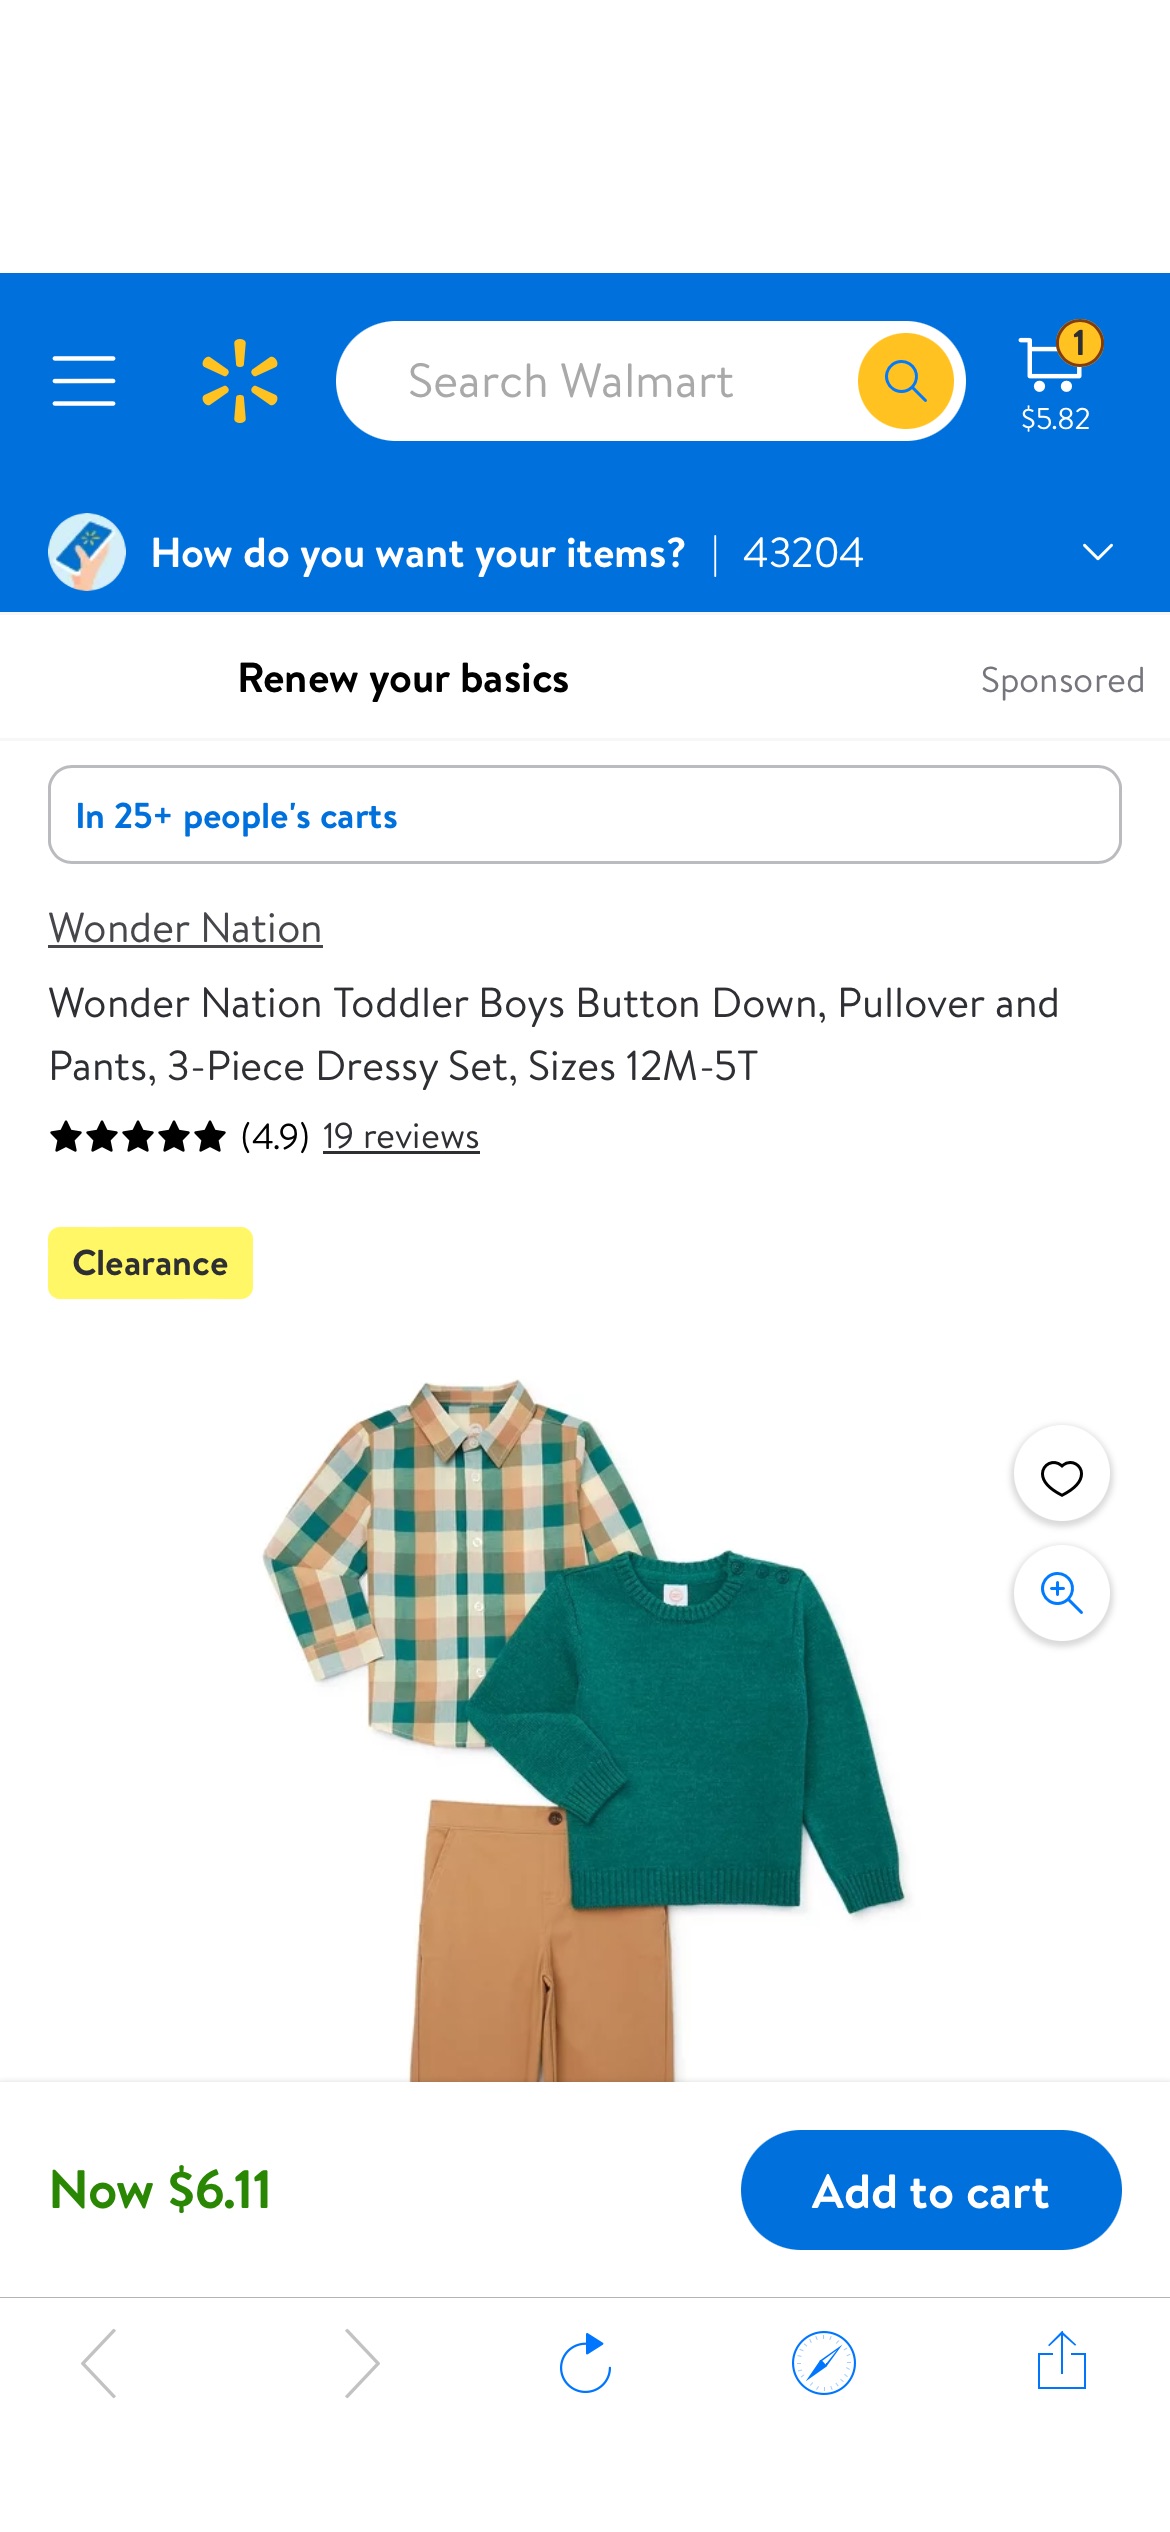 Wonder Nation Toddler Boys Button Down, Pullover and Pants, 3-Piece Dressy Set, Sizes 12M-5T - Walmart.com婴儿三件套